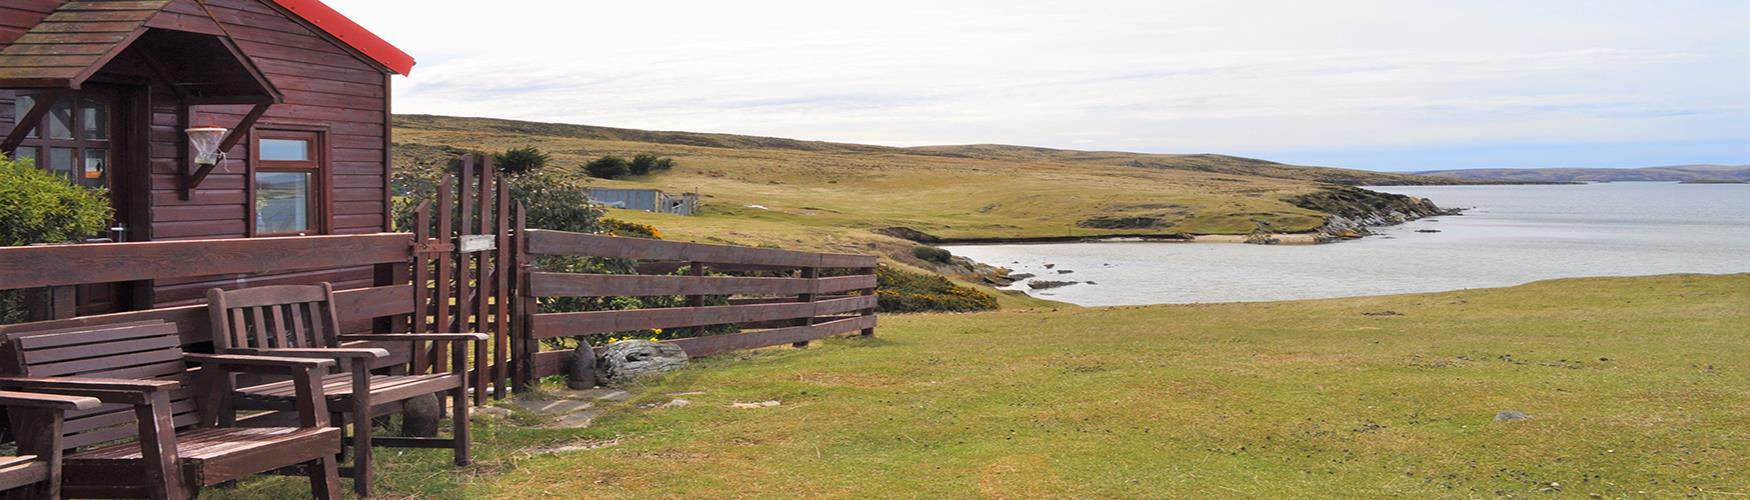 Port Edgar, West Falkland, Falkland Islands